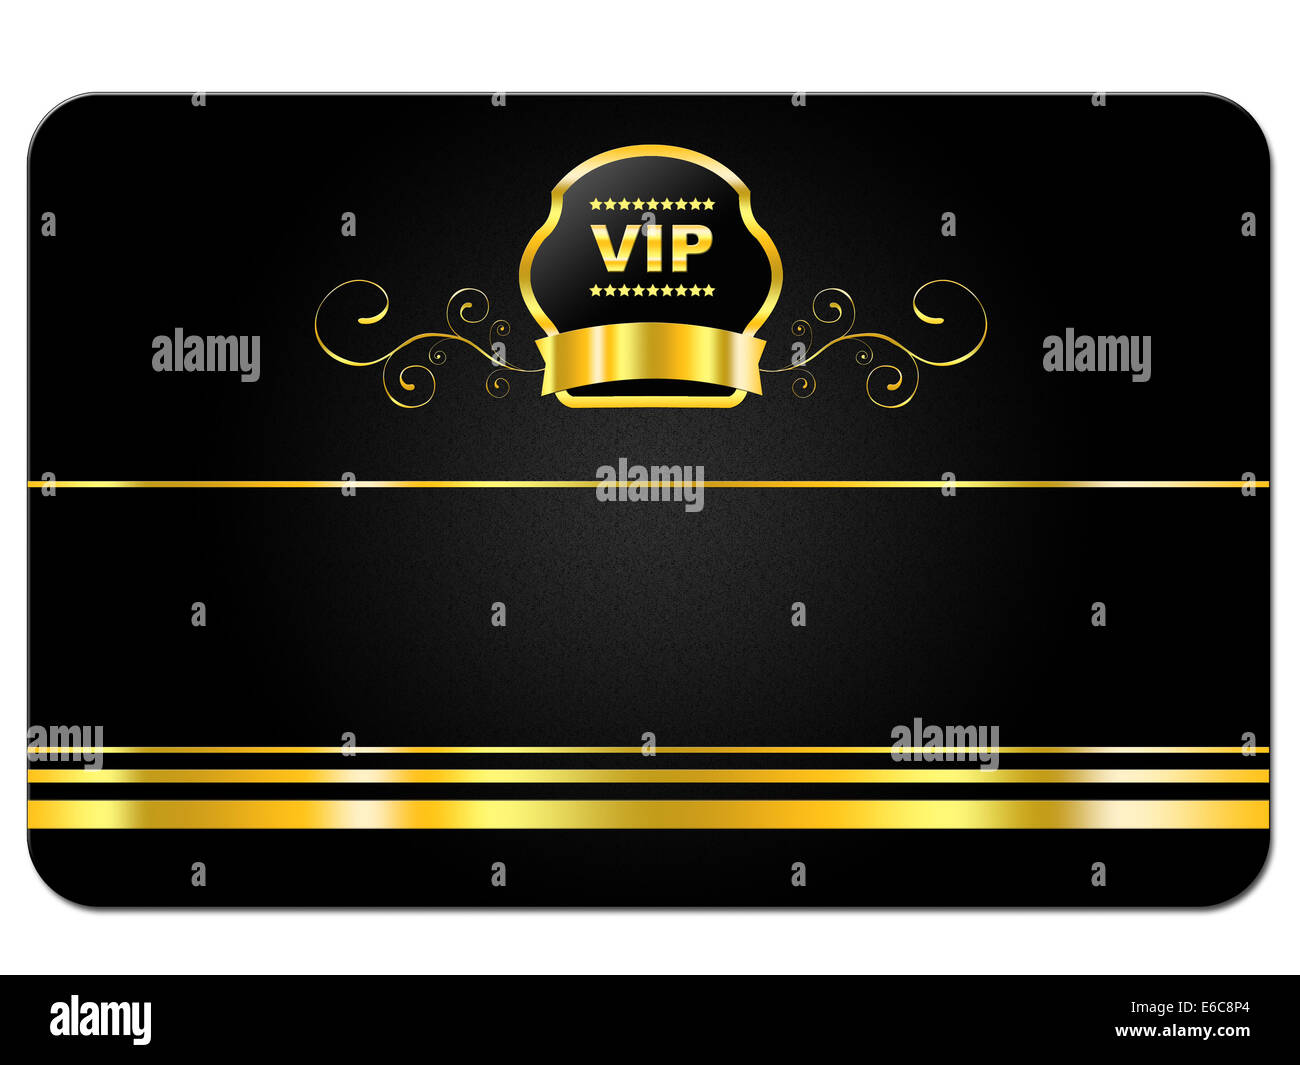 VIP MEMBERSHIP CARD Stock Photo - Alamy